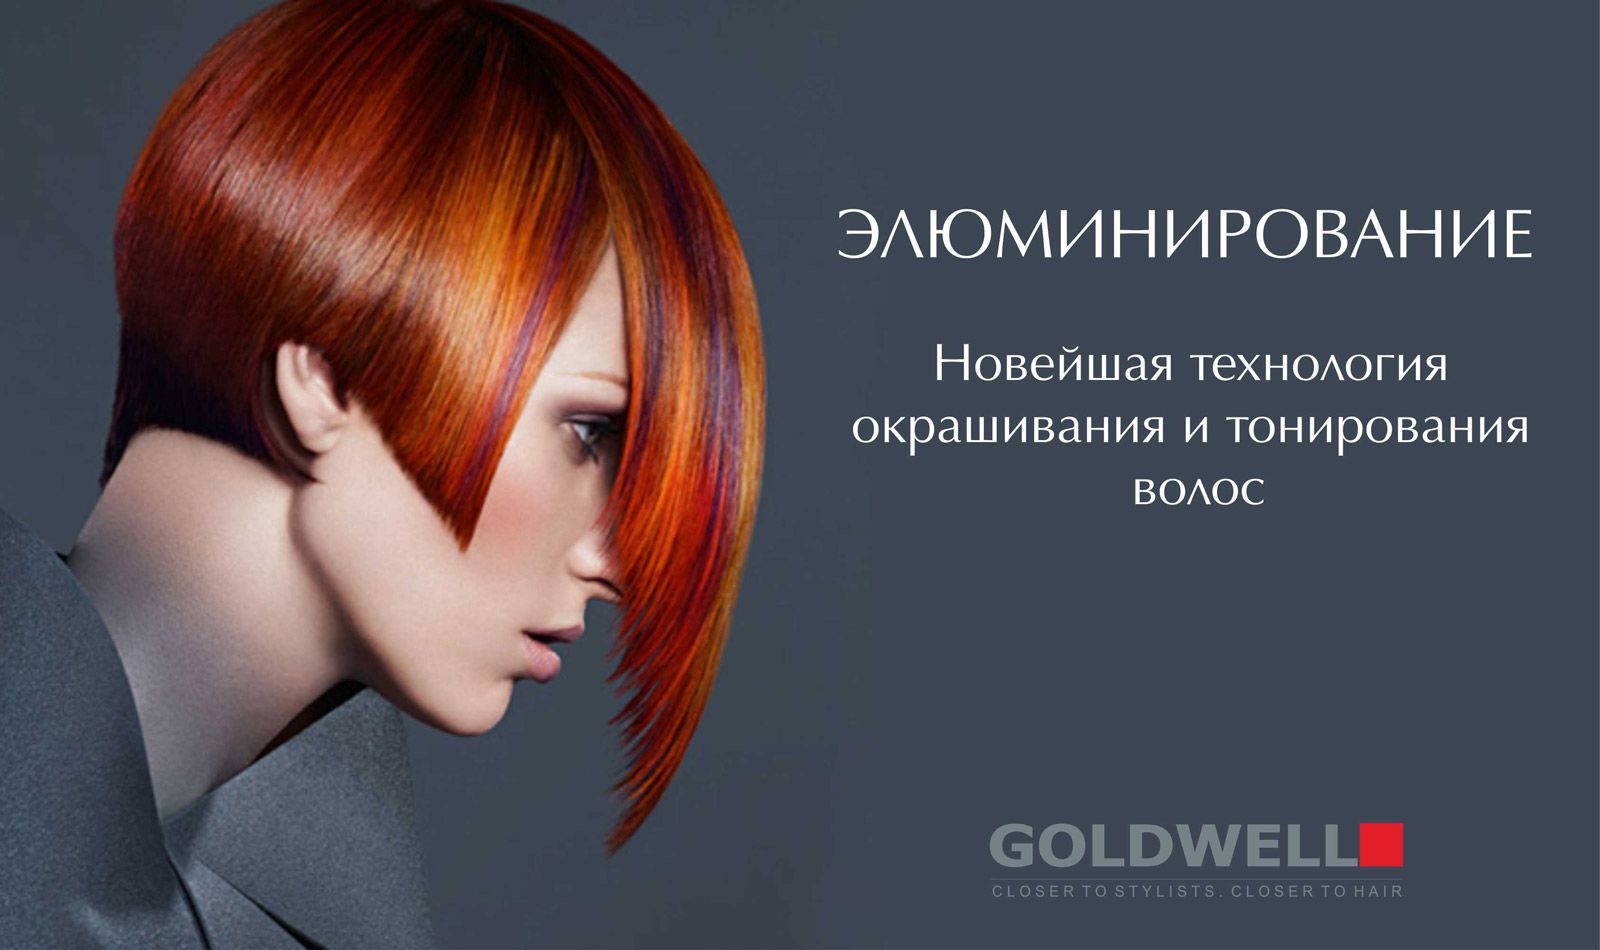 Окрашивание волос goldwell: